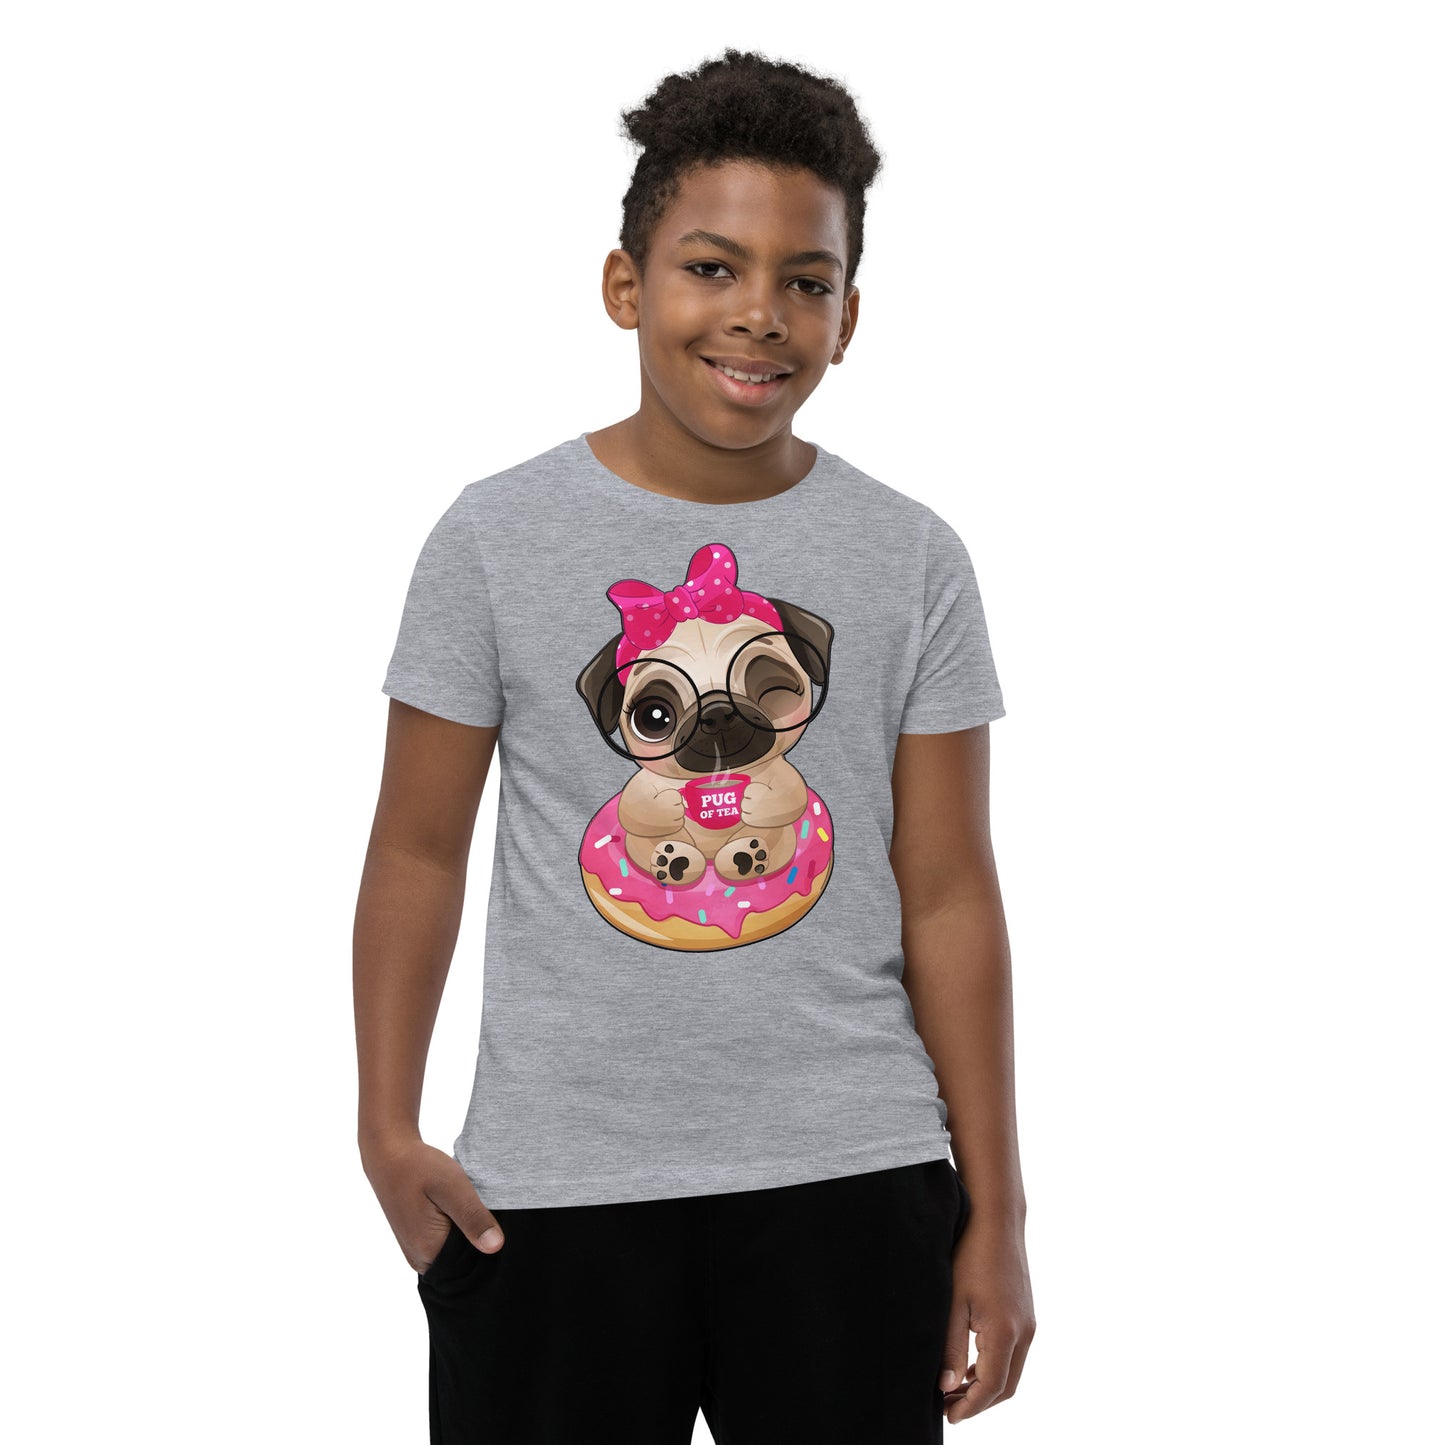 Cute Little Pug Dog Sitting in Donut T-shirt, No. 0365